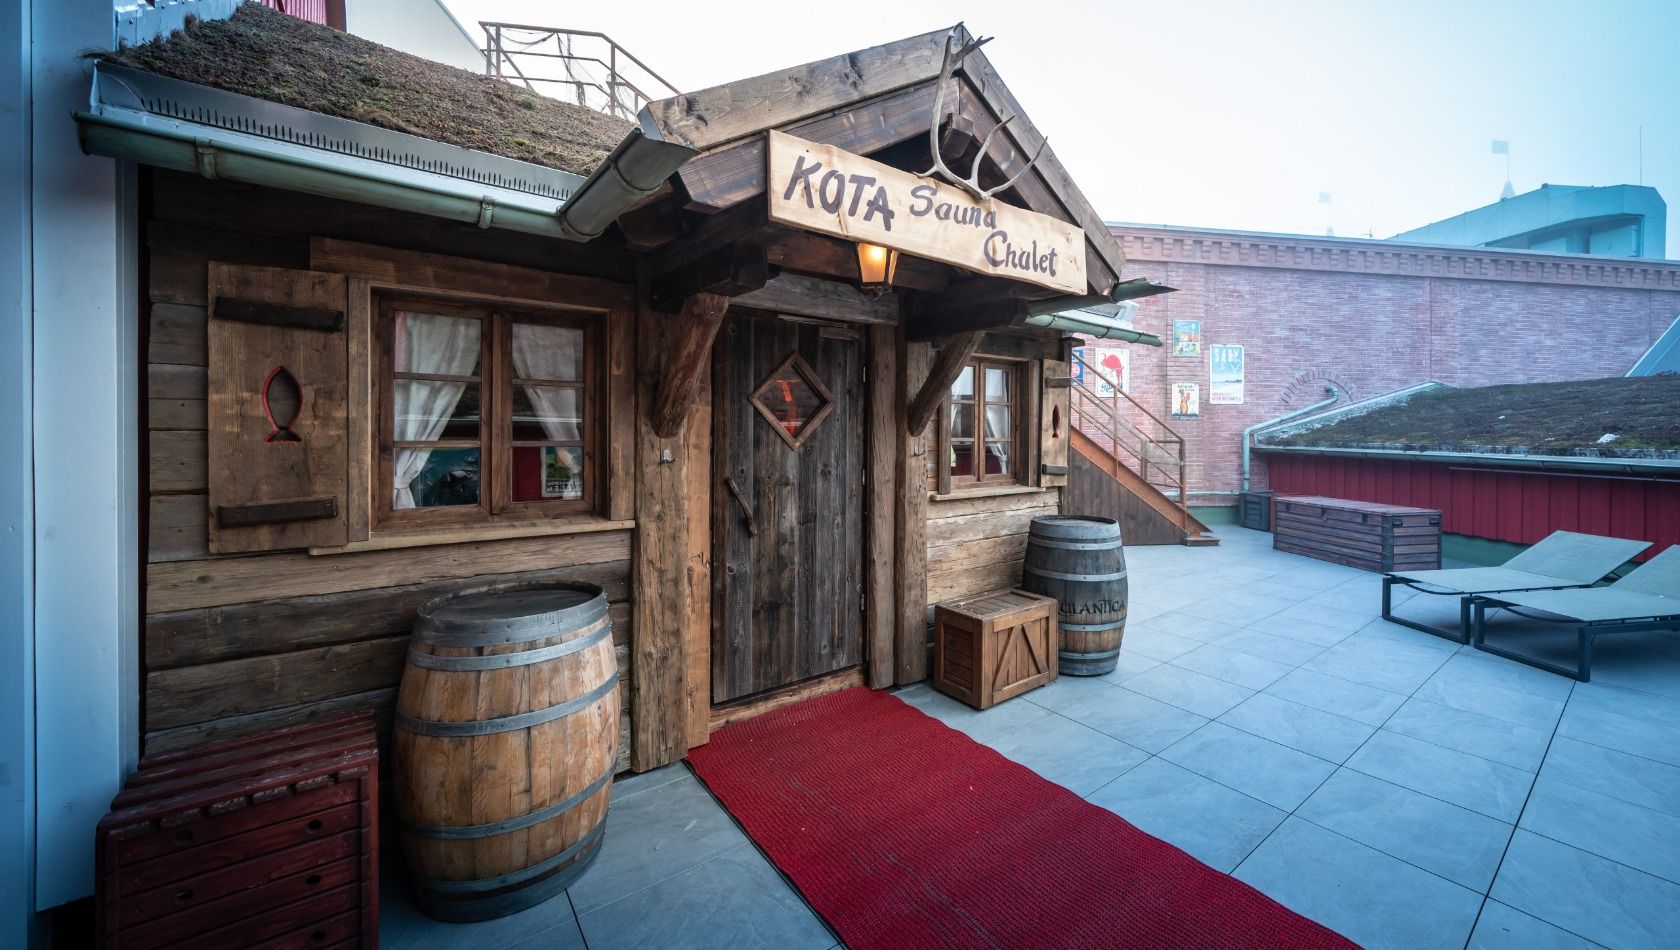 Rulantica eröffnet neue Sauna-Hütte "KOTA Sauna Chalet"